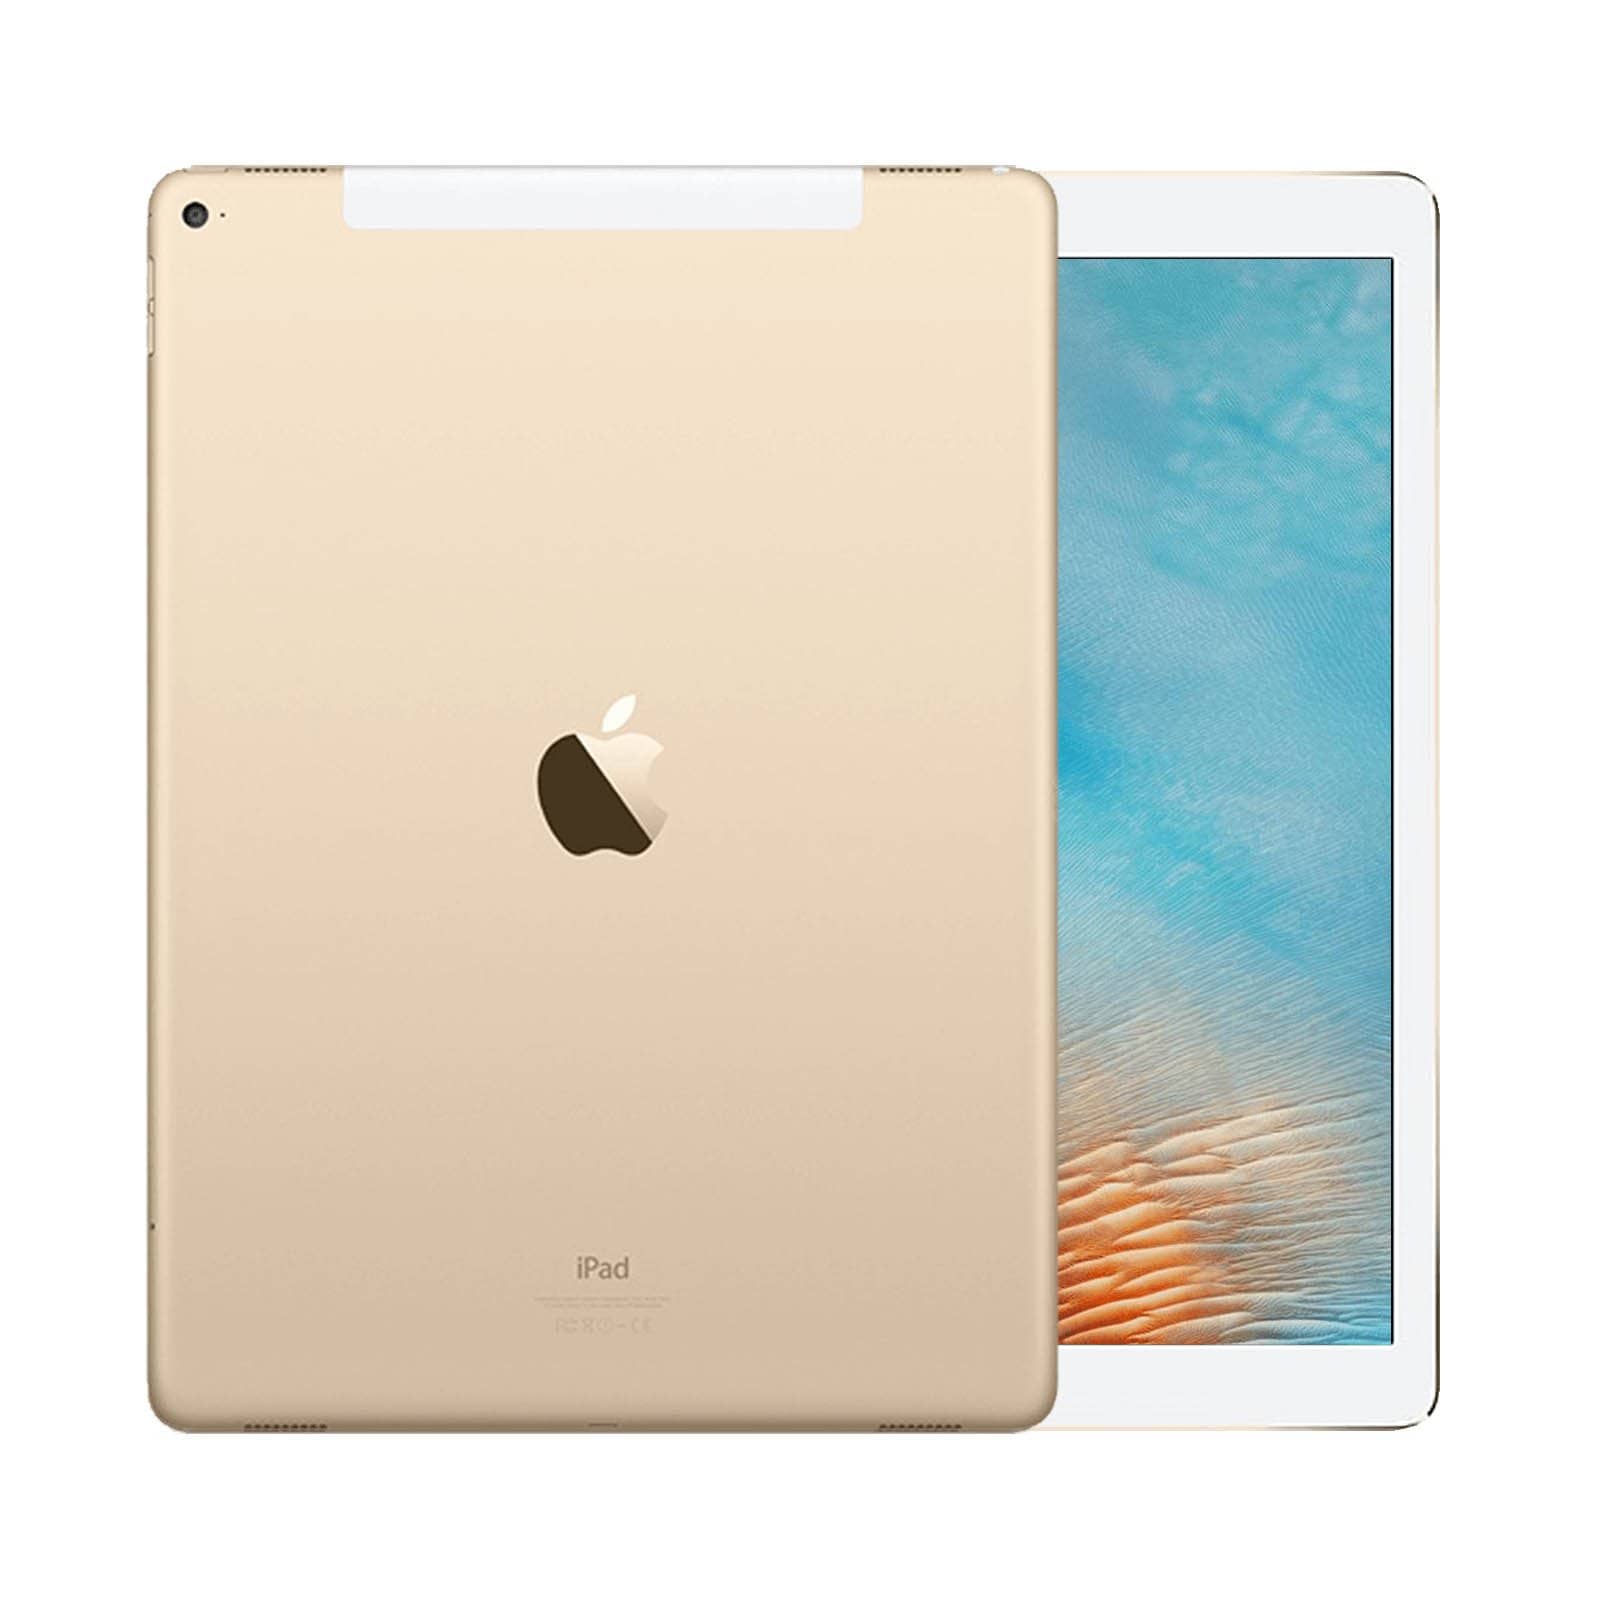 iPad Pro 12.9 Inch 1st Gen 128GB Gold Very Good - WiFi 128GB Gold Very Good